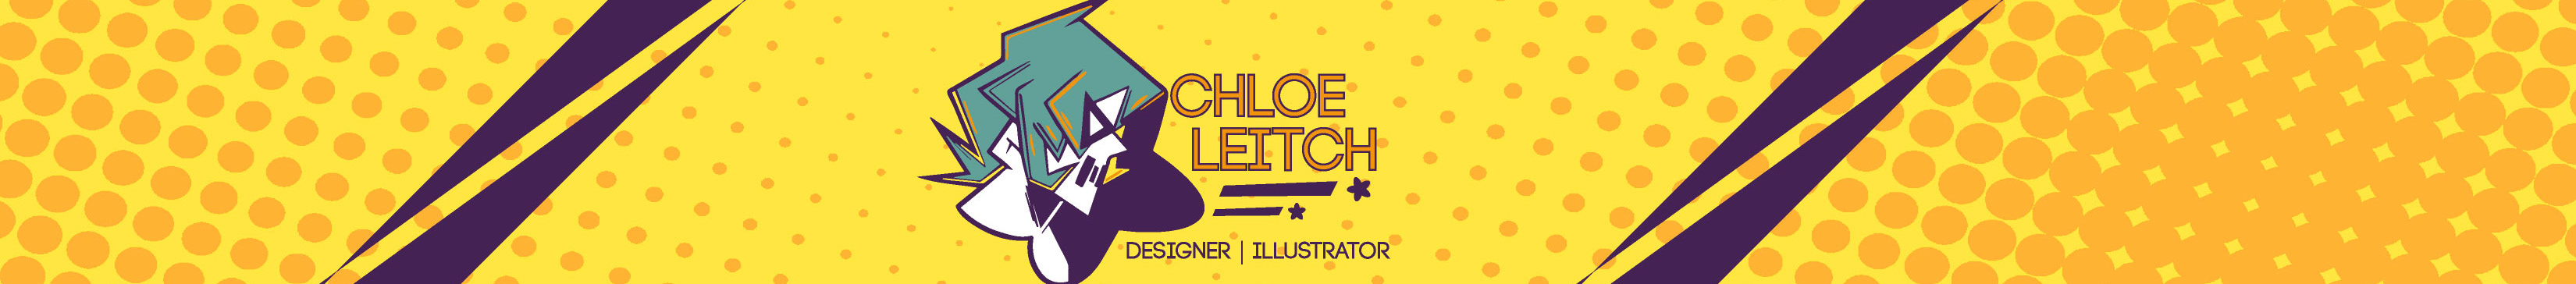 Banner de perfil de Chloe Leitch